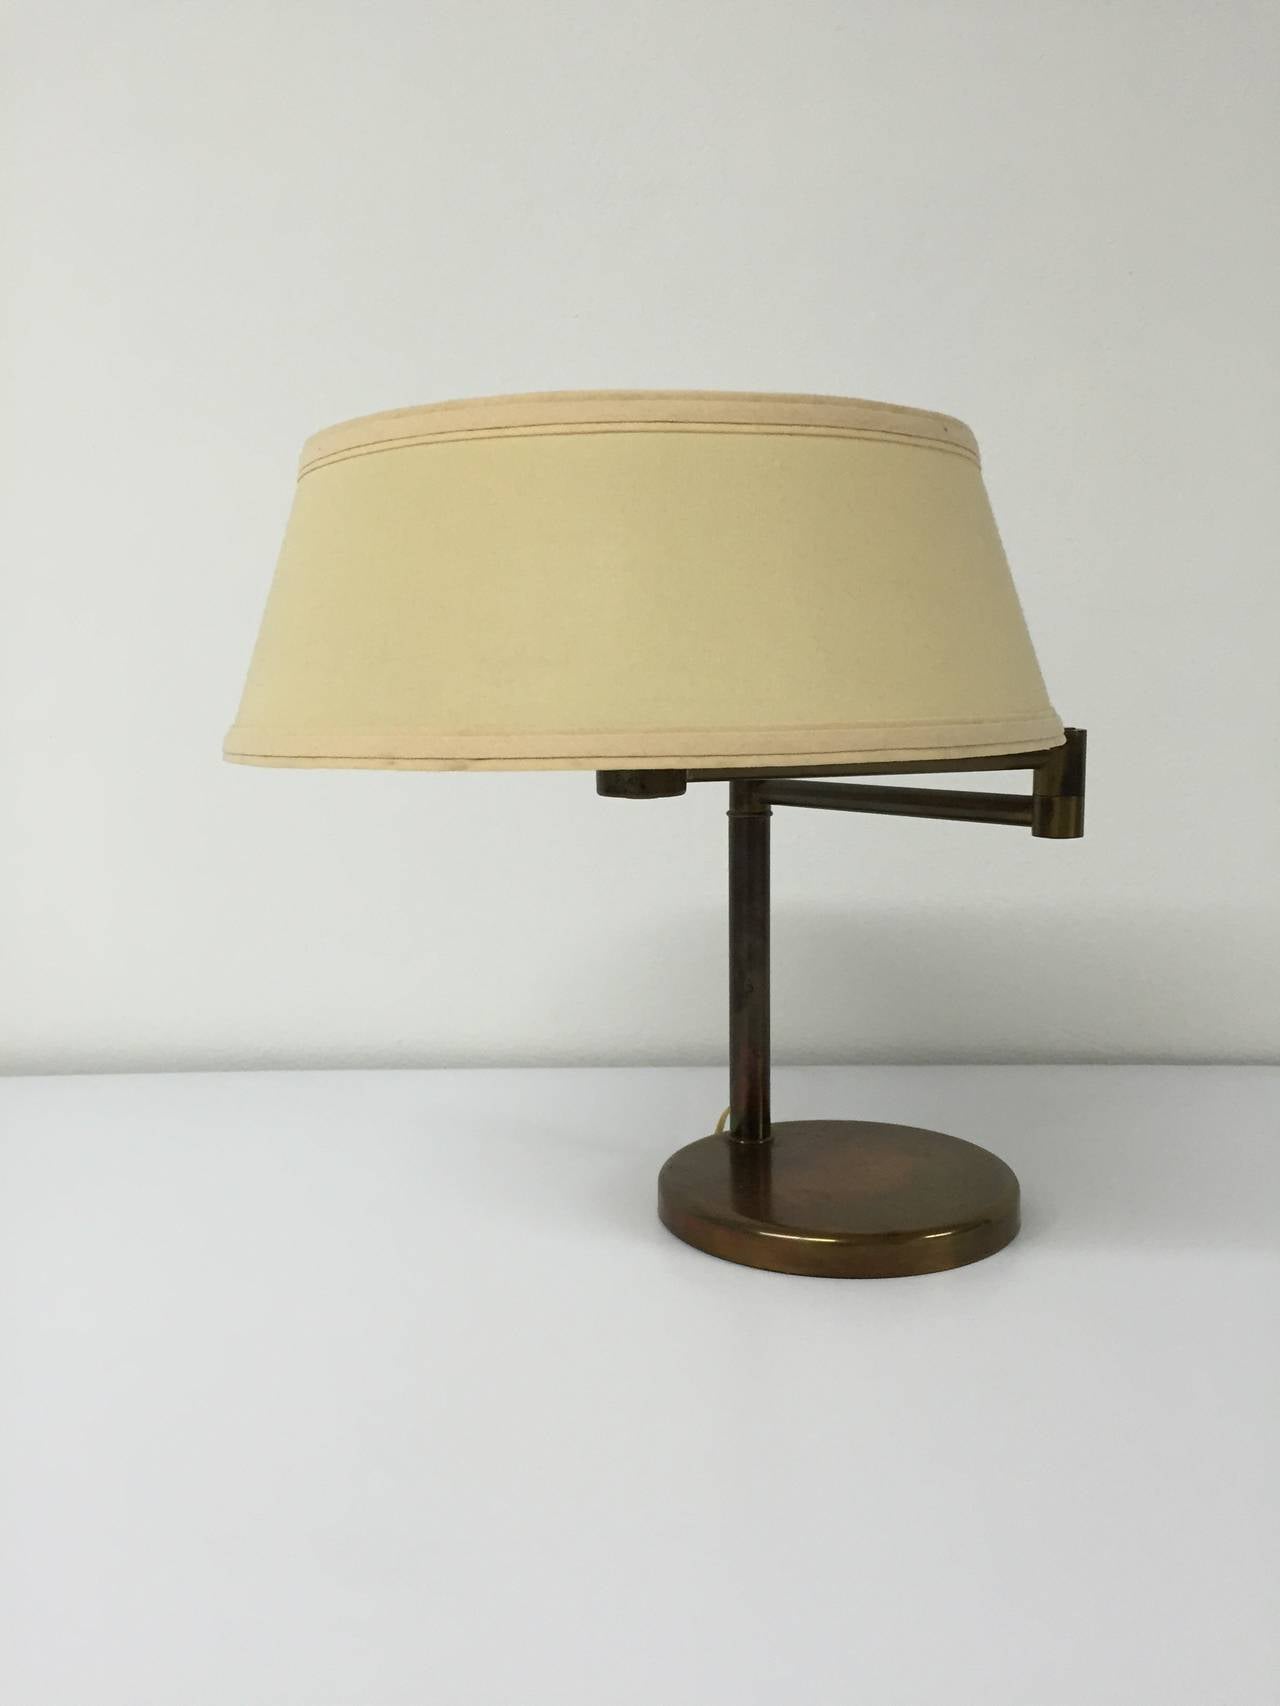 Swing arm desk lamp in brass with original linen shade and metal diffuser by Walter Von Nessen for Nessen Studio.